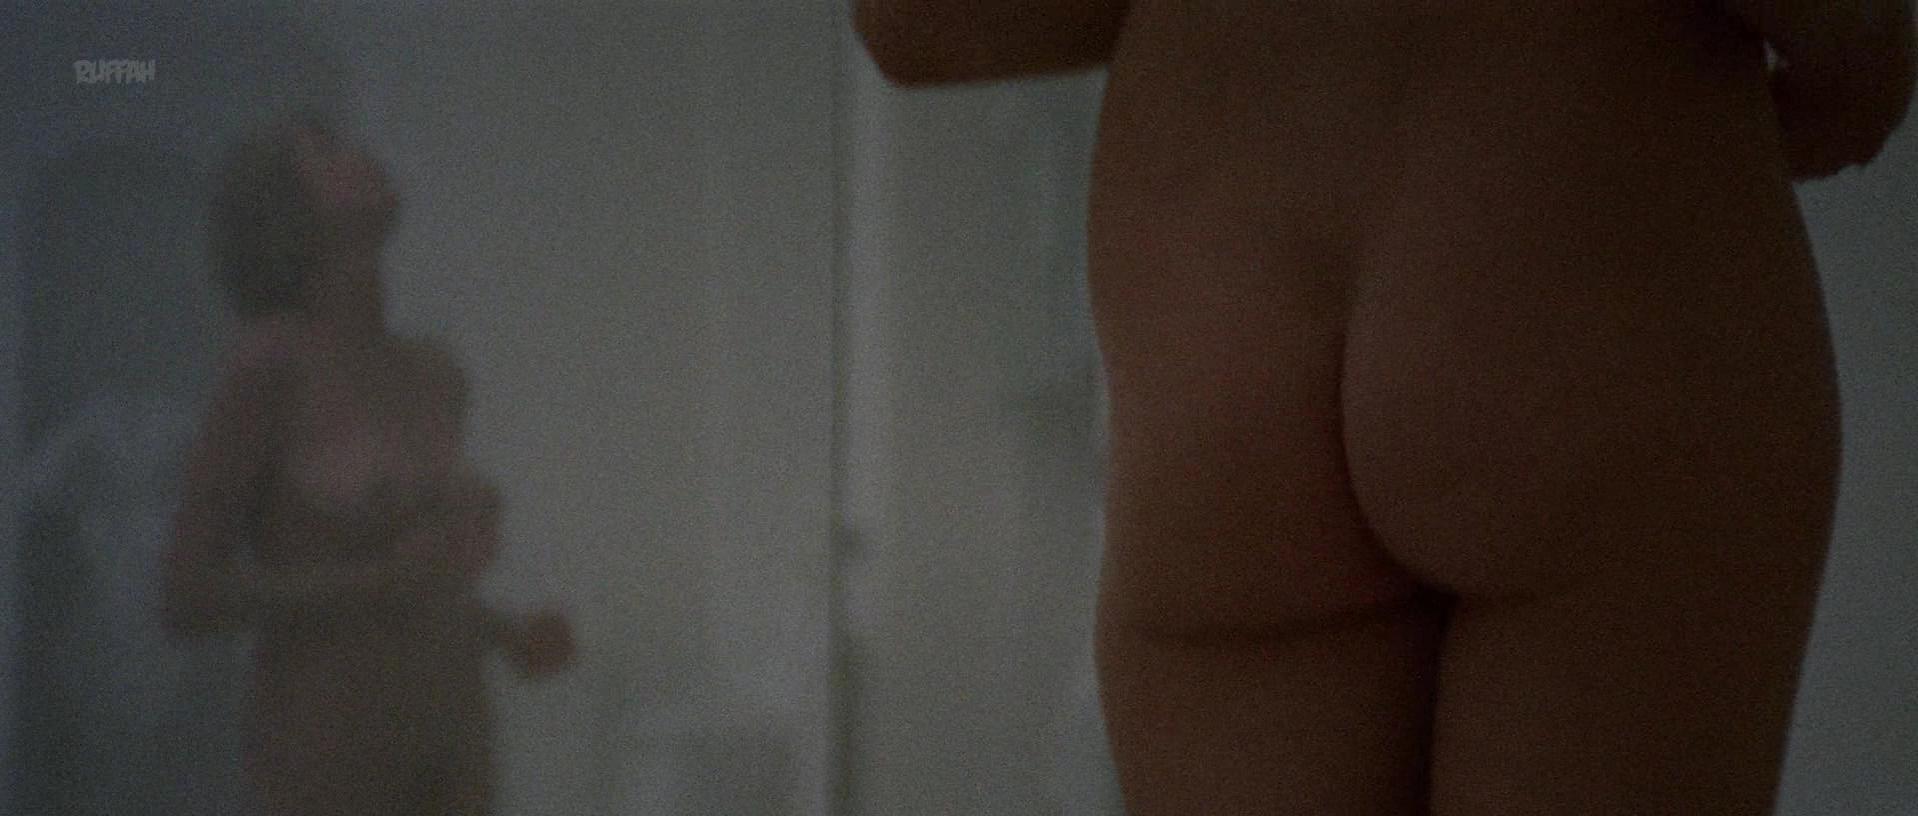 Nude video celebs » Susannah York nude - Images (1972)